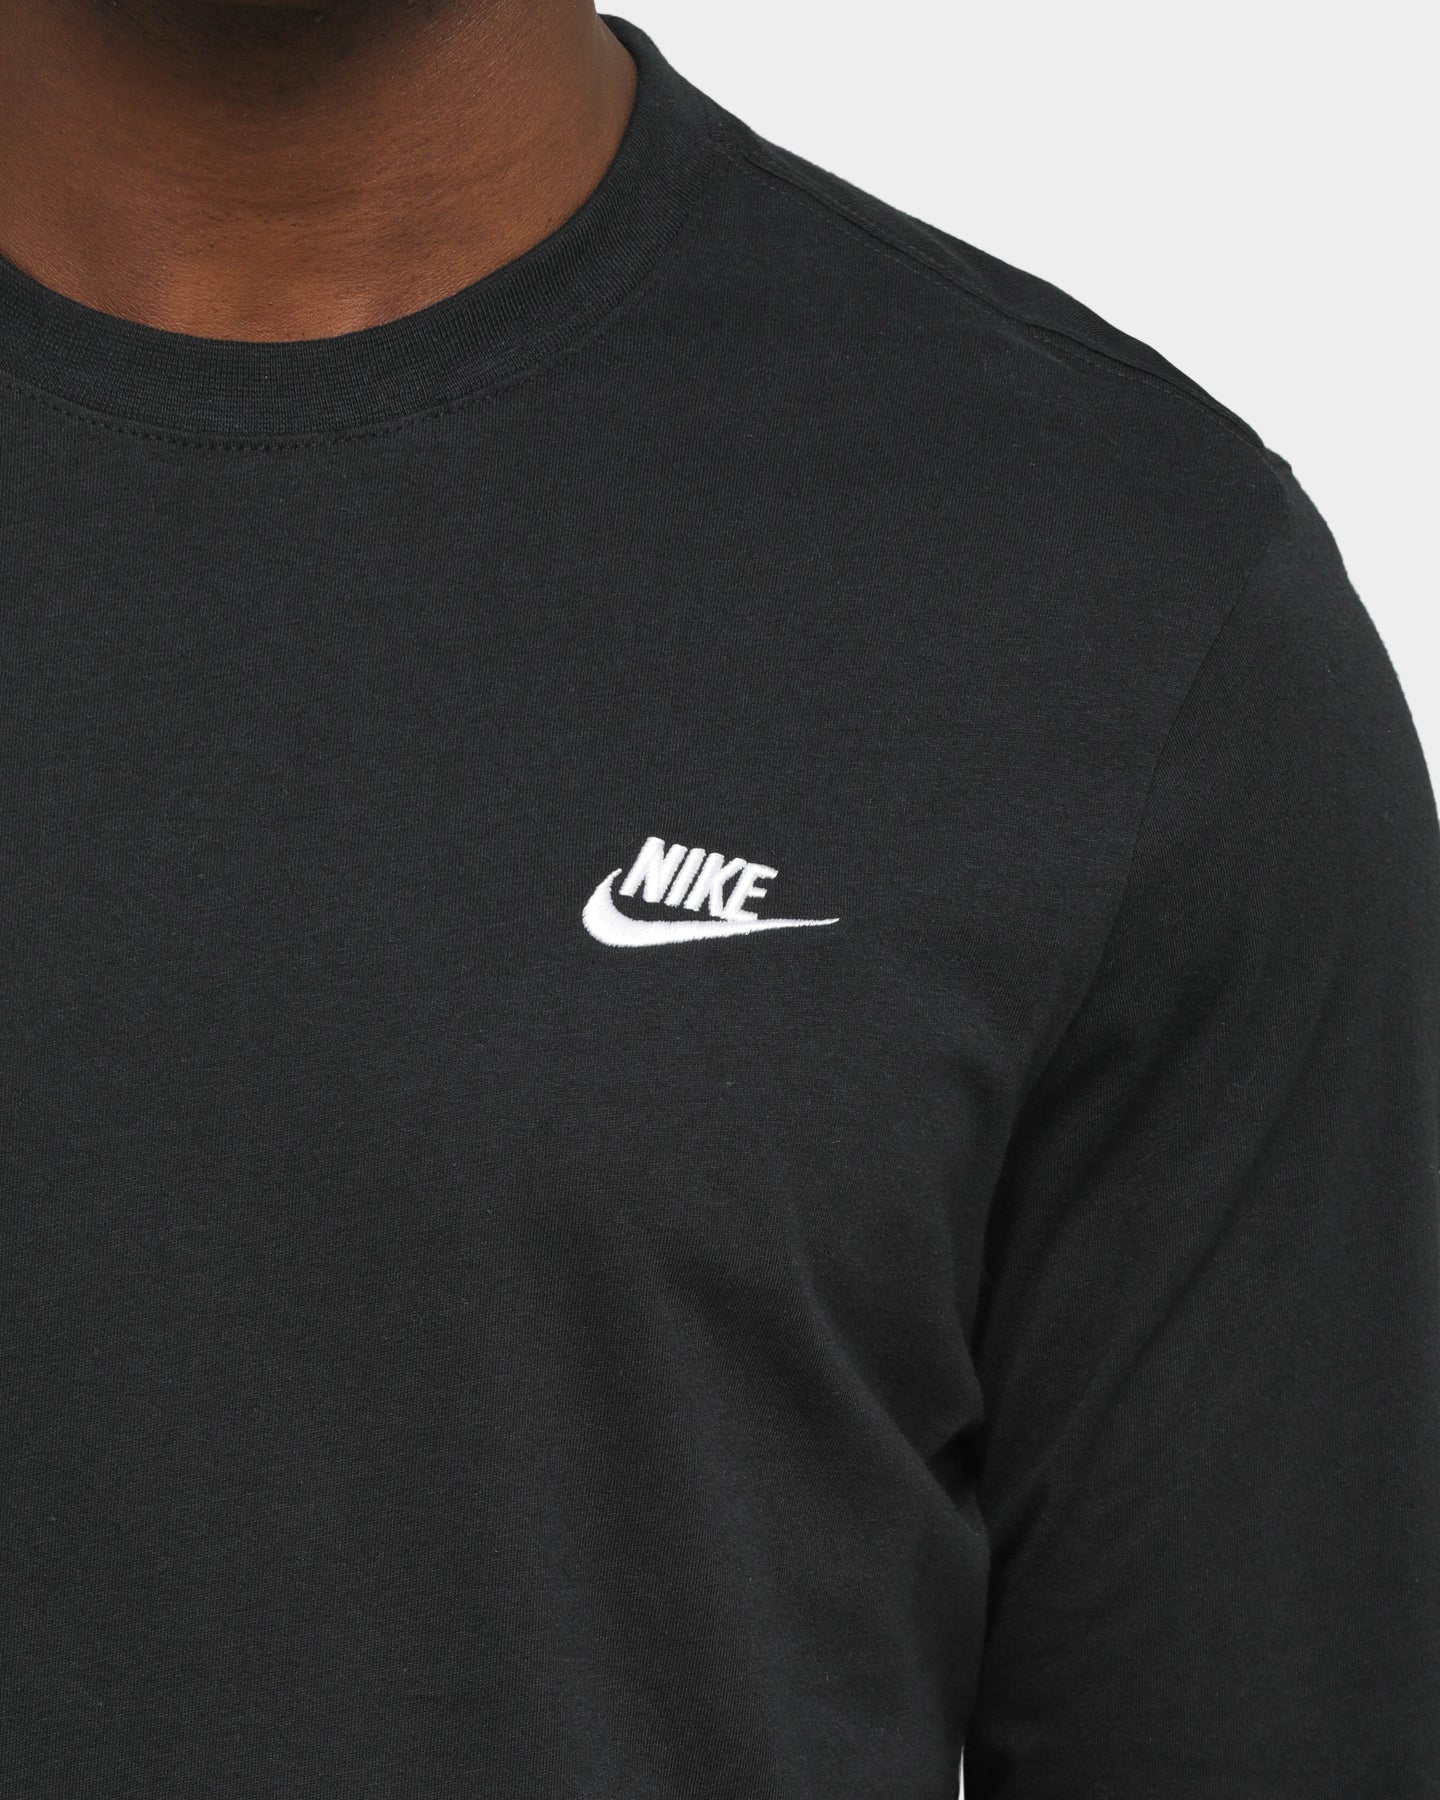 nike logo long sleeve shirt